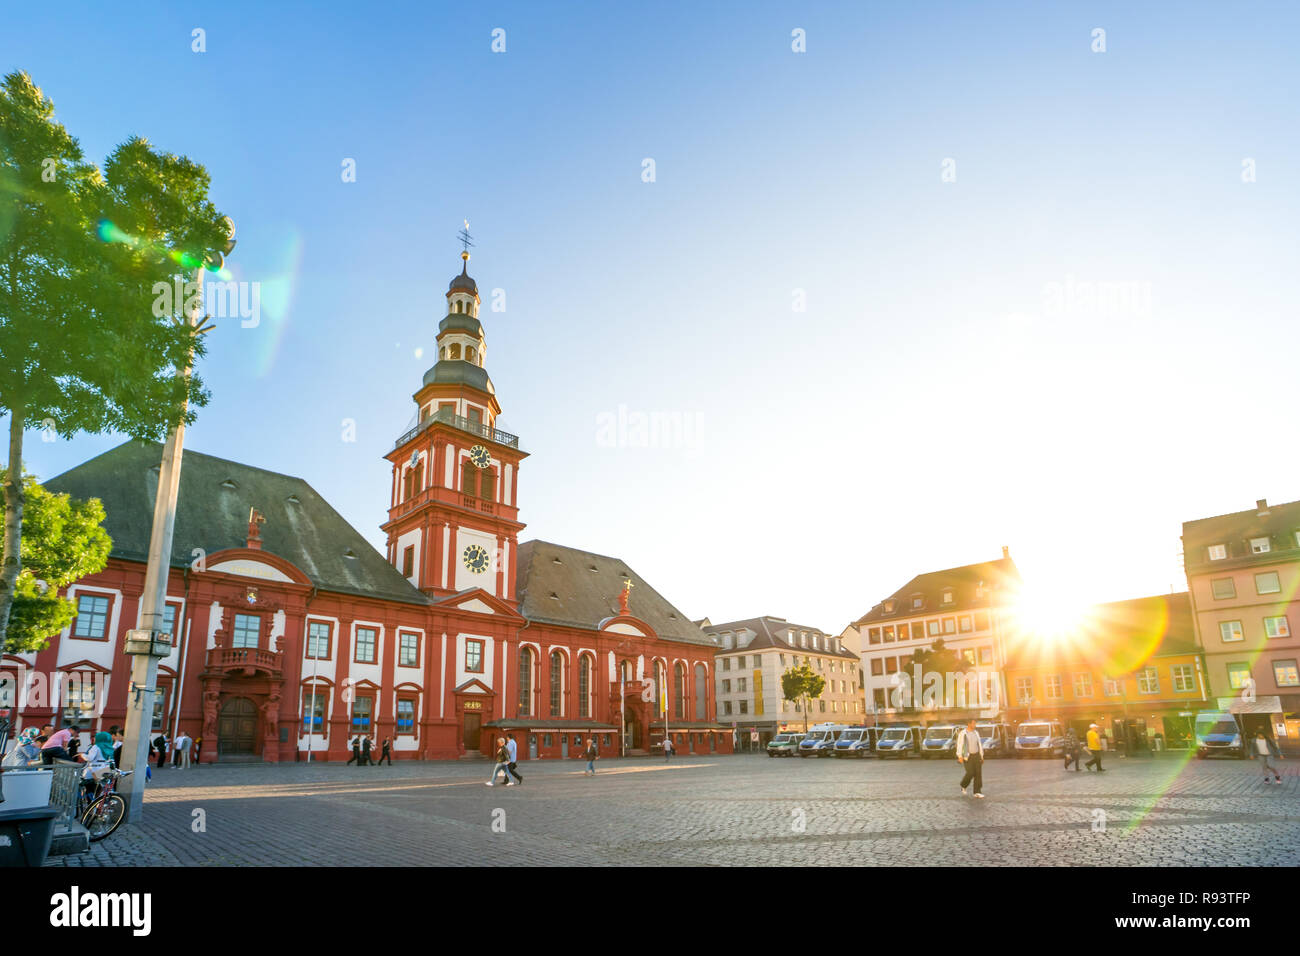 Market Town hall, Mannheim, Germany Stock Photo